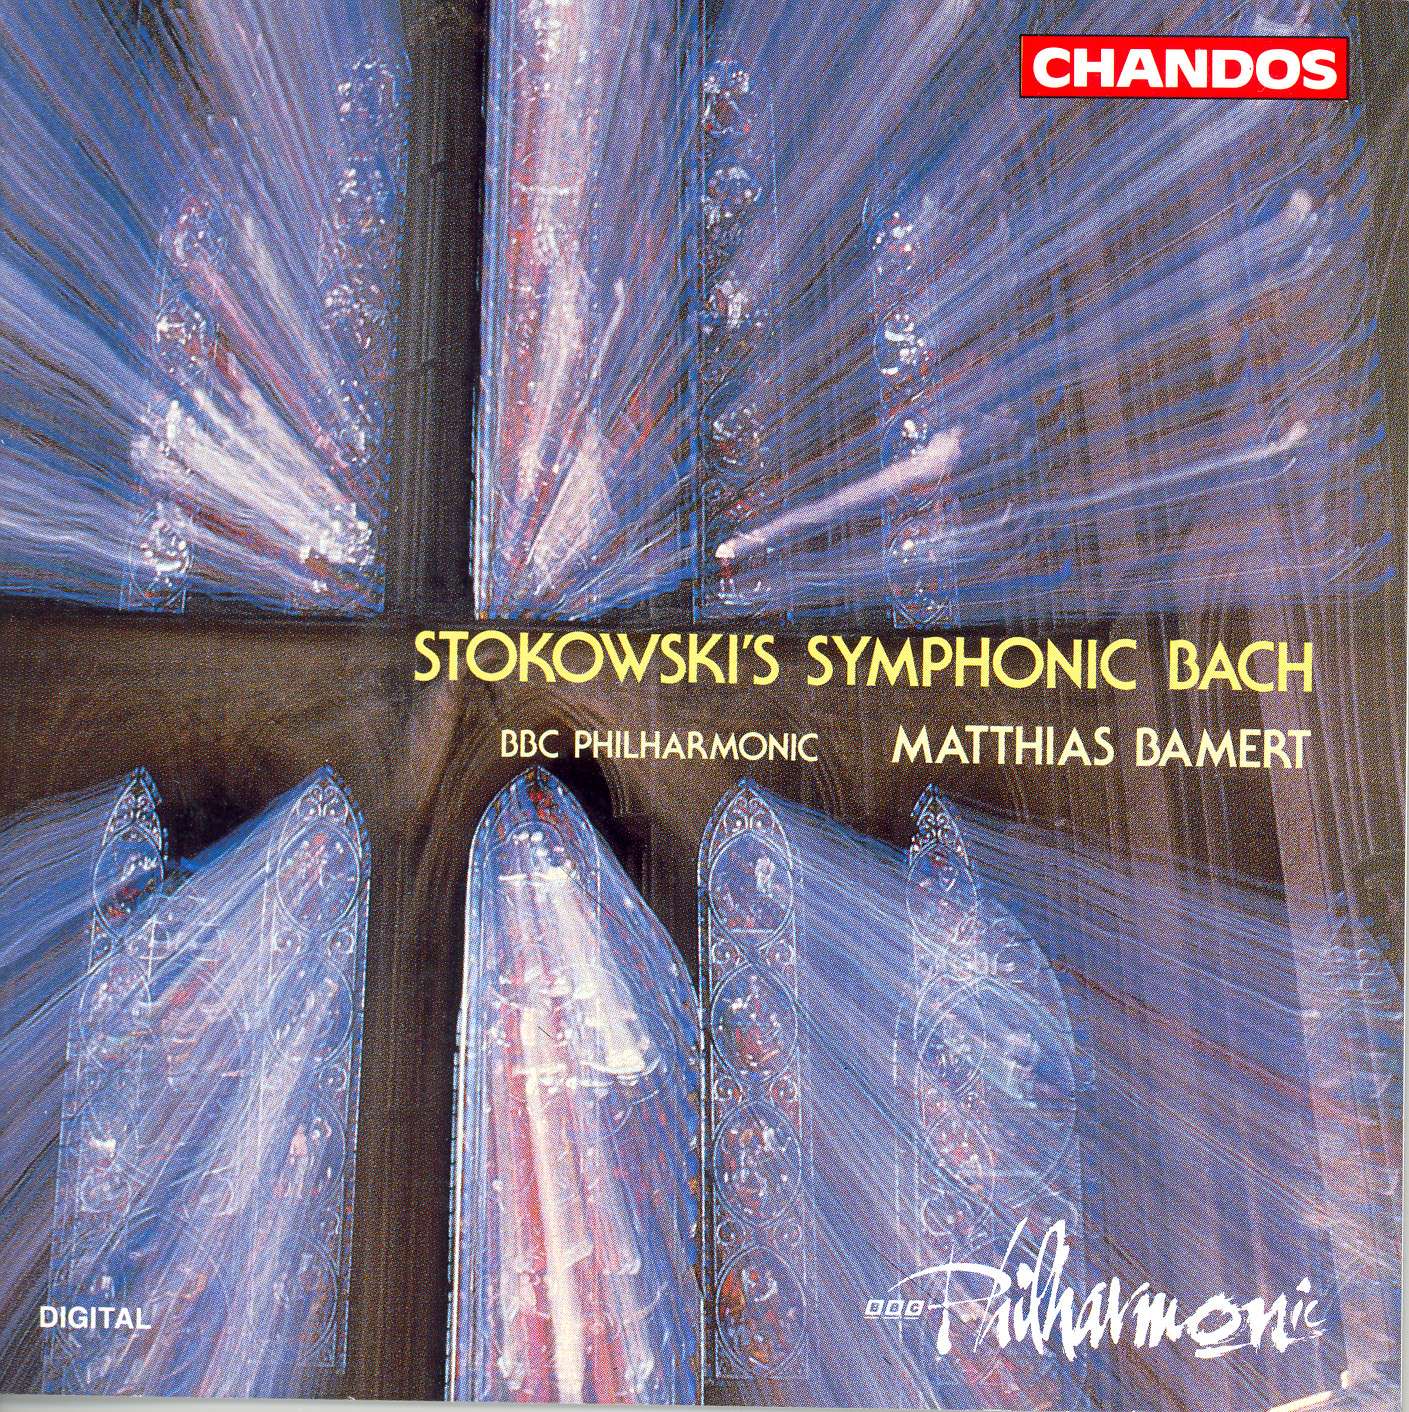 Stokowski's Symphonic Bach / Bambert, BBC Philharmonic